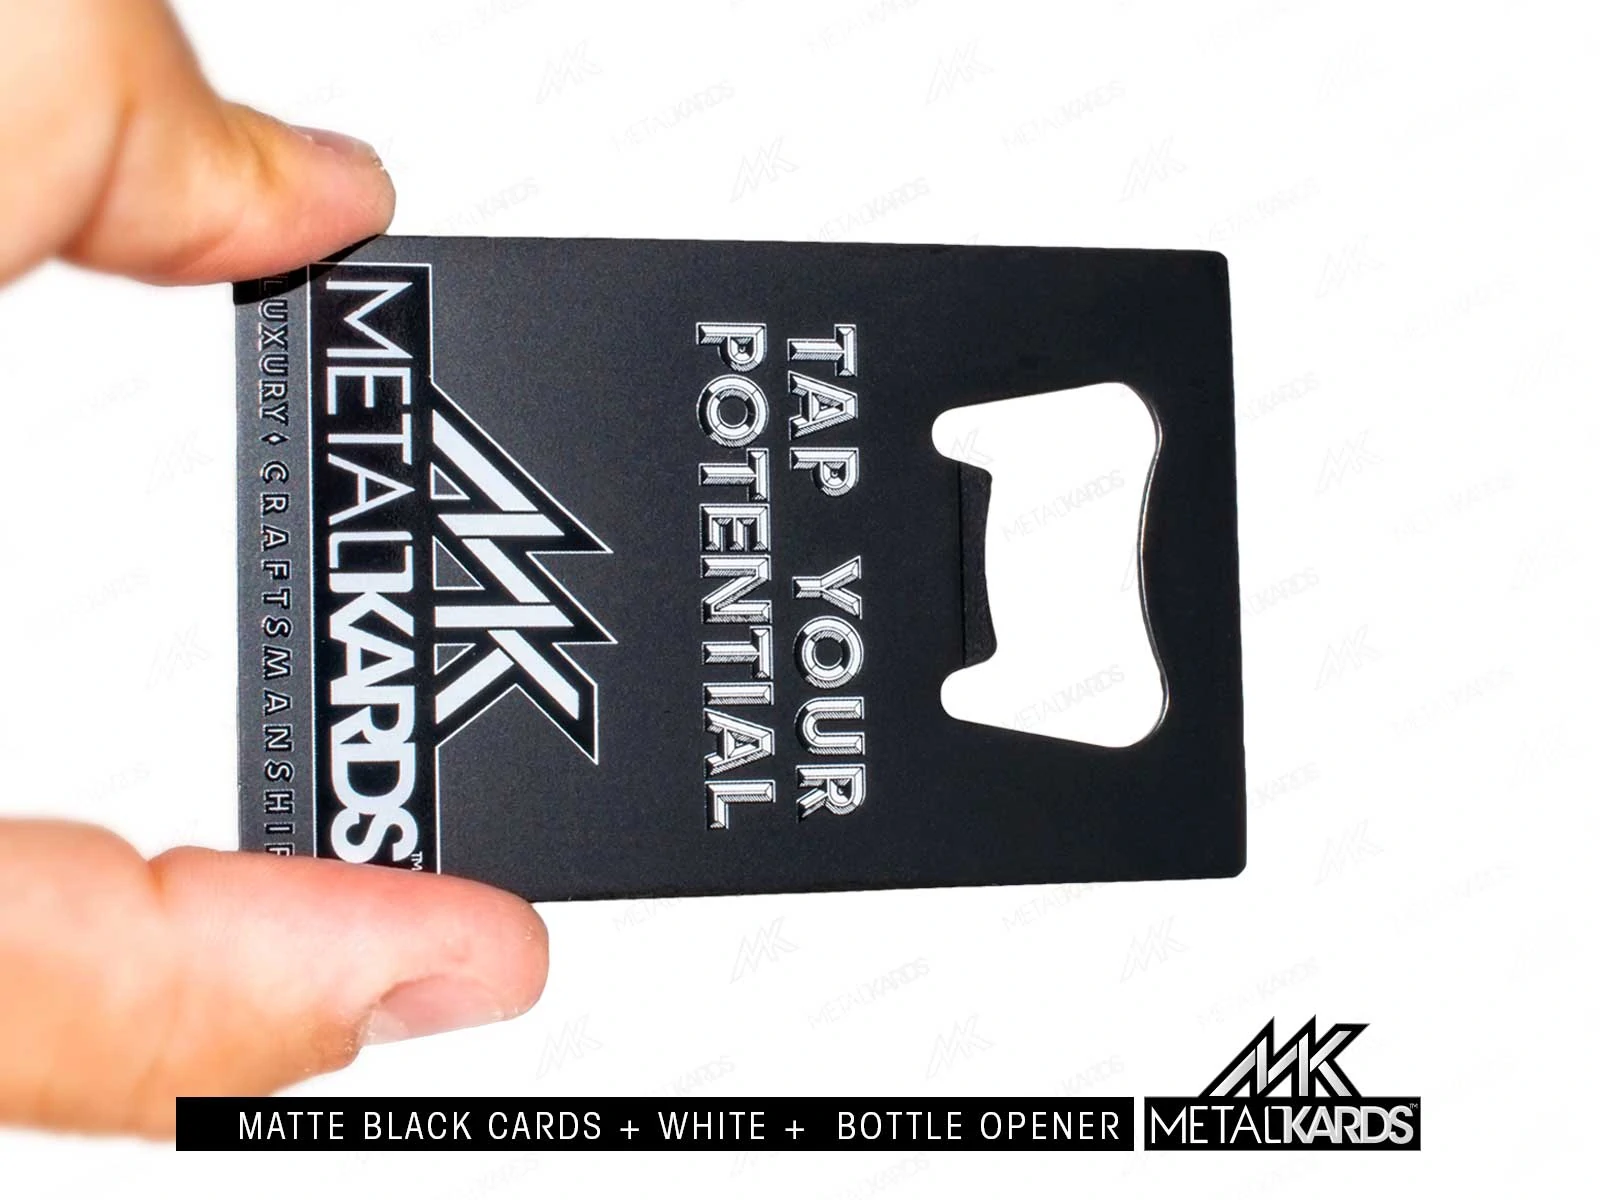 Original Black Metal Cards - MetalKards.com